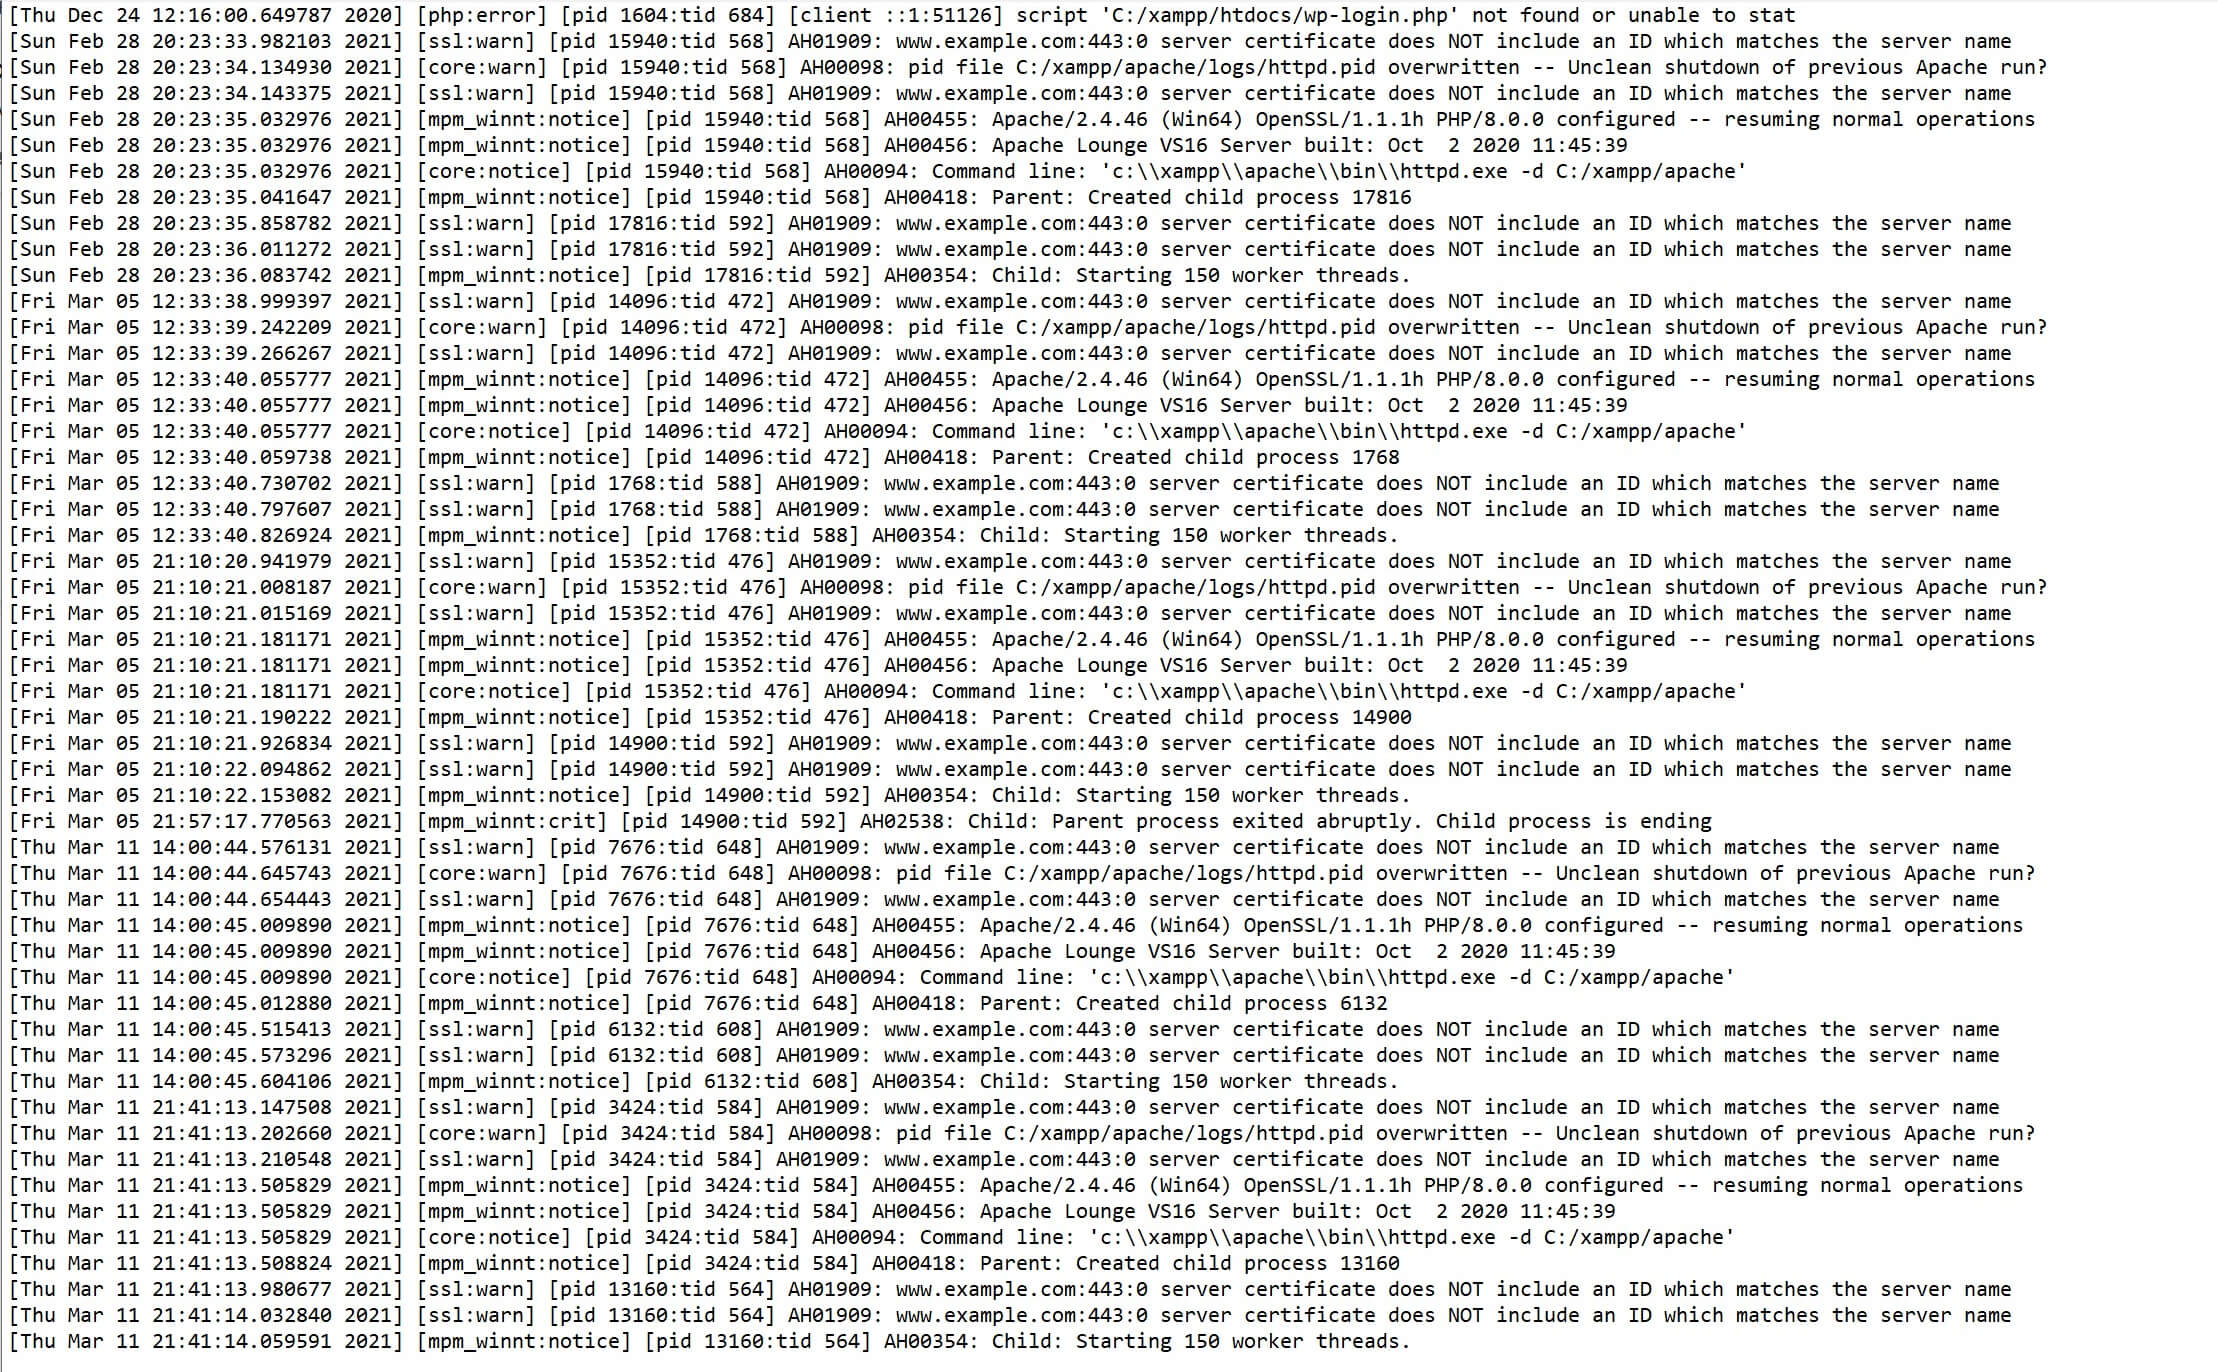 The XAMPP error log arranged in chronological order.